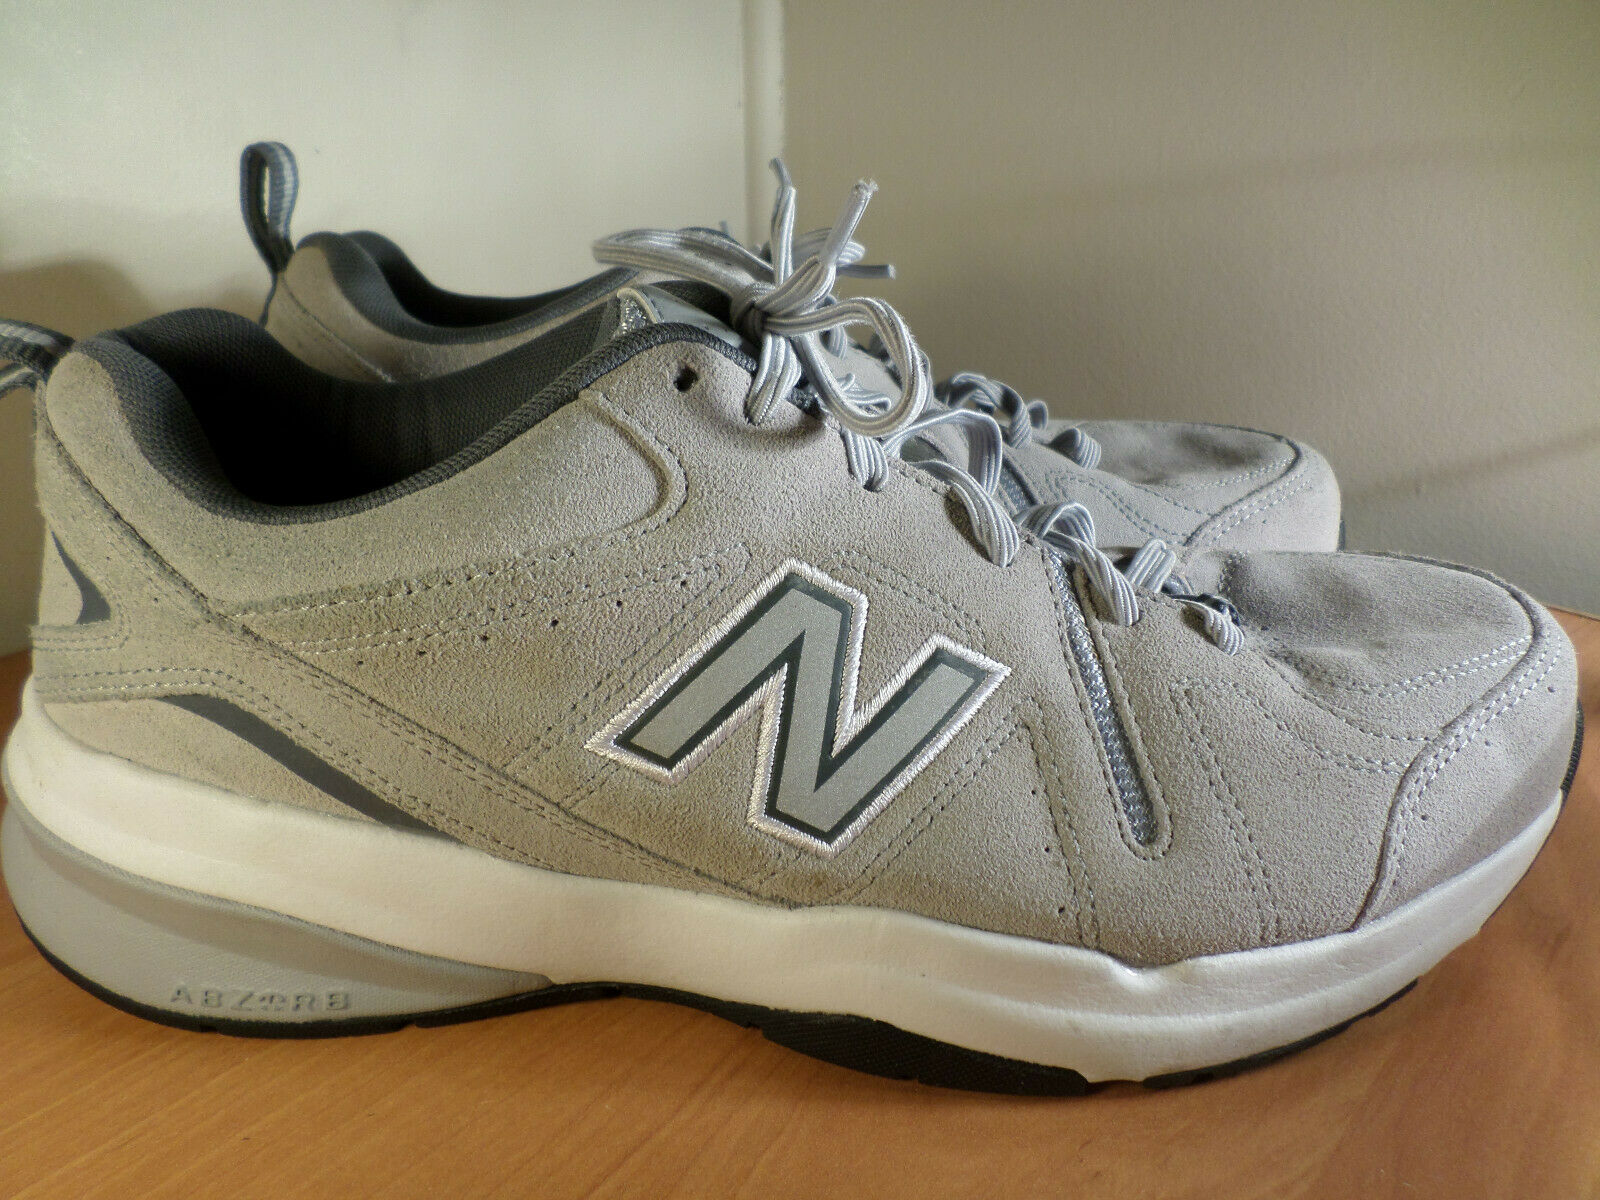 New Balance 619 Walking Shoes Mens Sz 10 (Extra Wide 4E) Gray Suede - Super Nice